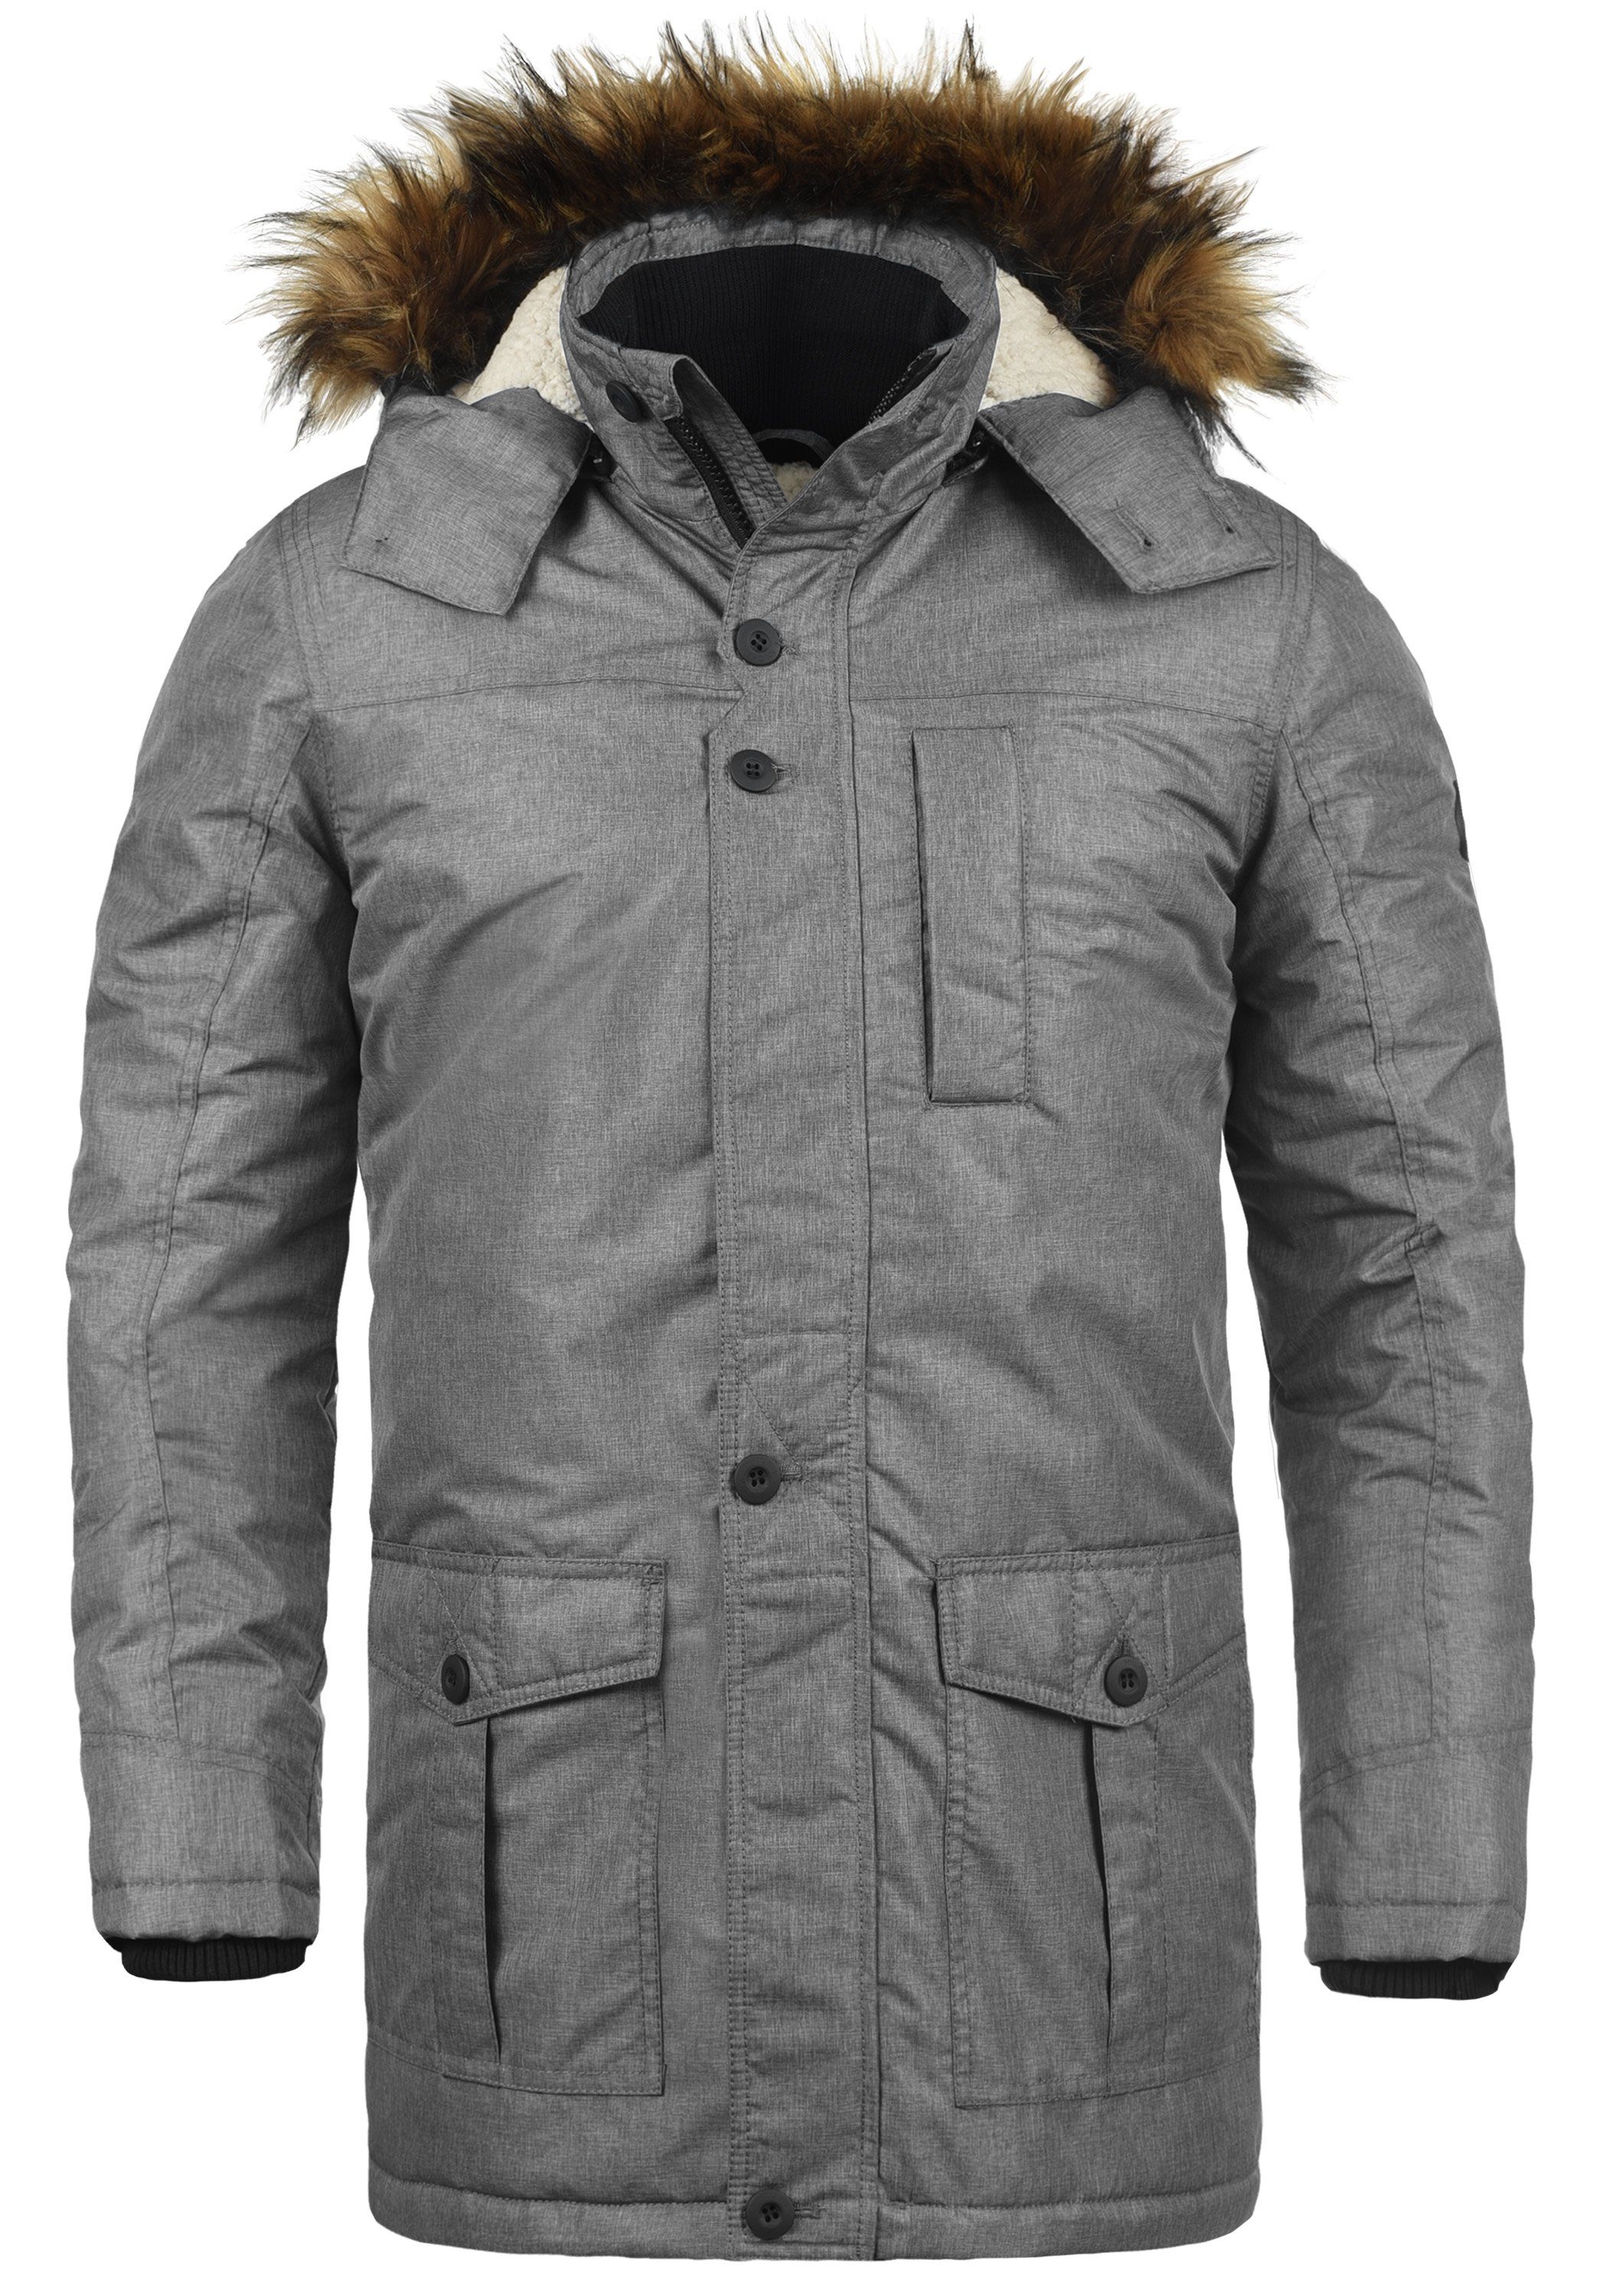 !Solid Winterjacke SDOctavus lange Jacke mit abnehmbarer Kapuze und Kunstfellkragen Grey Melange (8236)